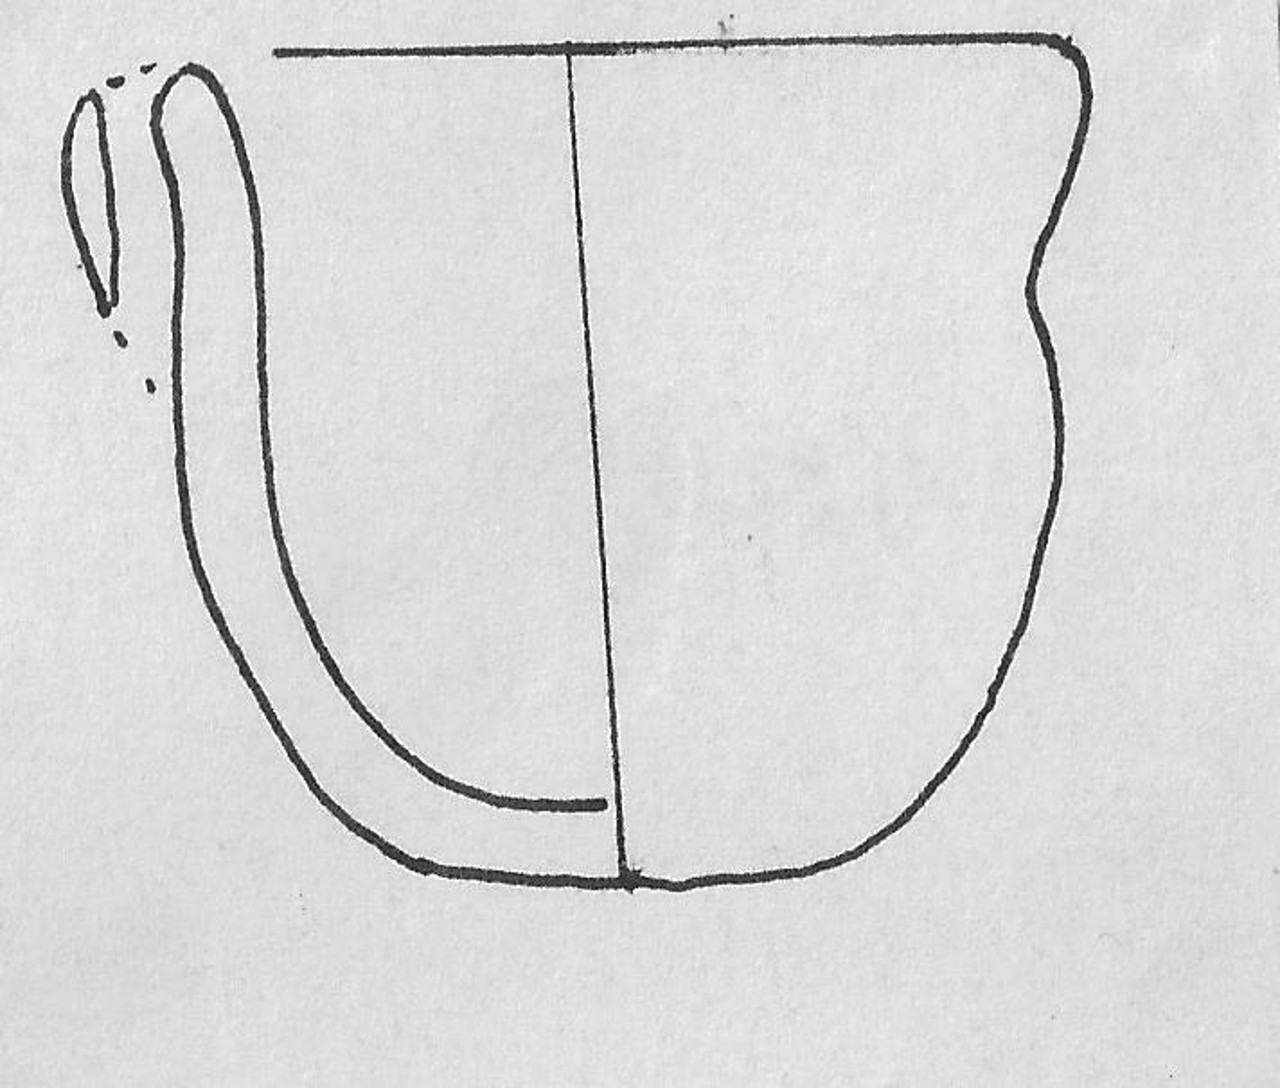 vasetto tronco-ovoidale - Facies Terramara (Età del Bronzo antico)